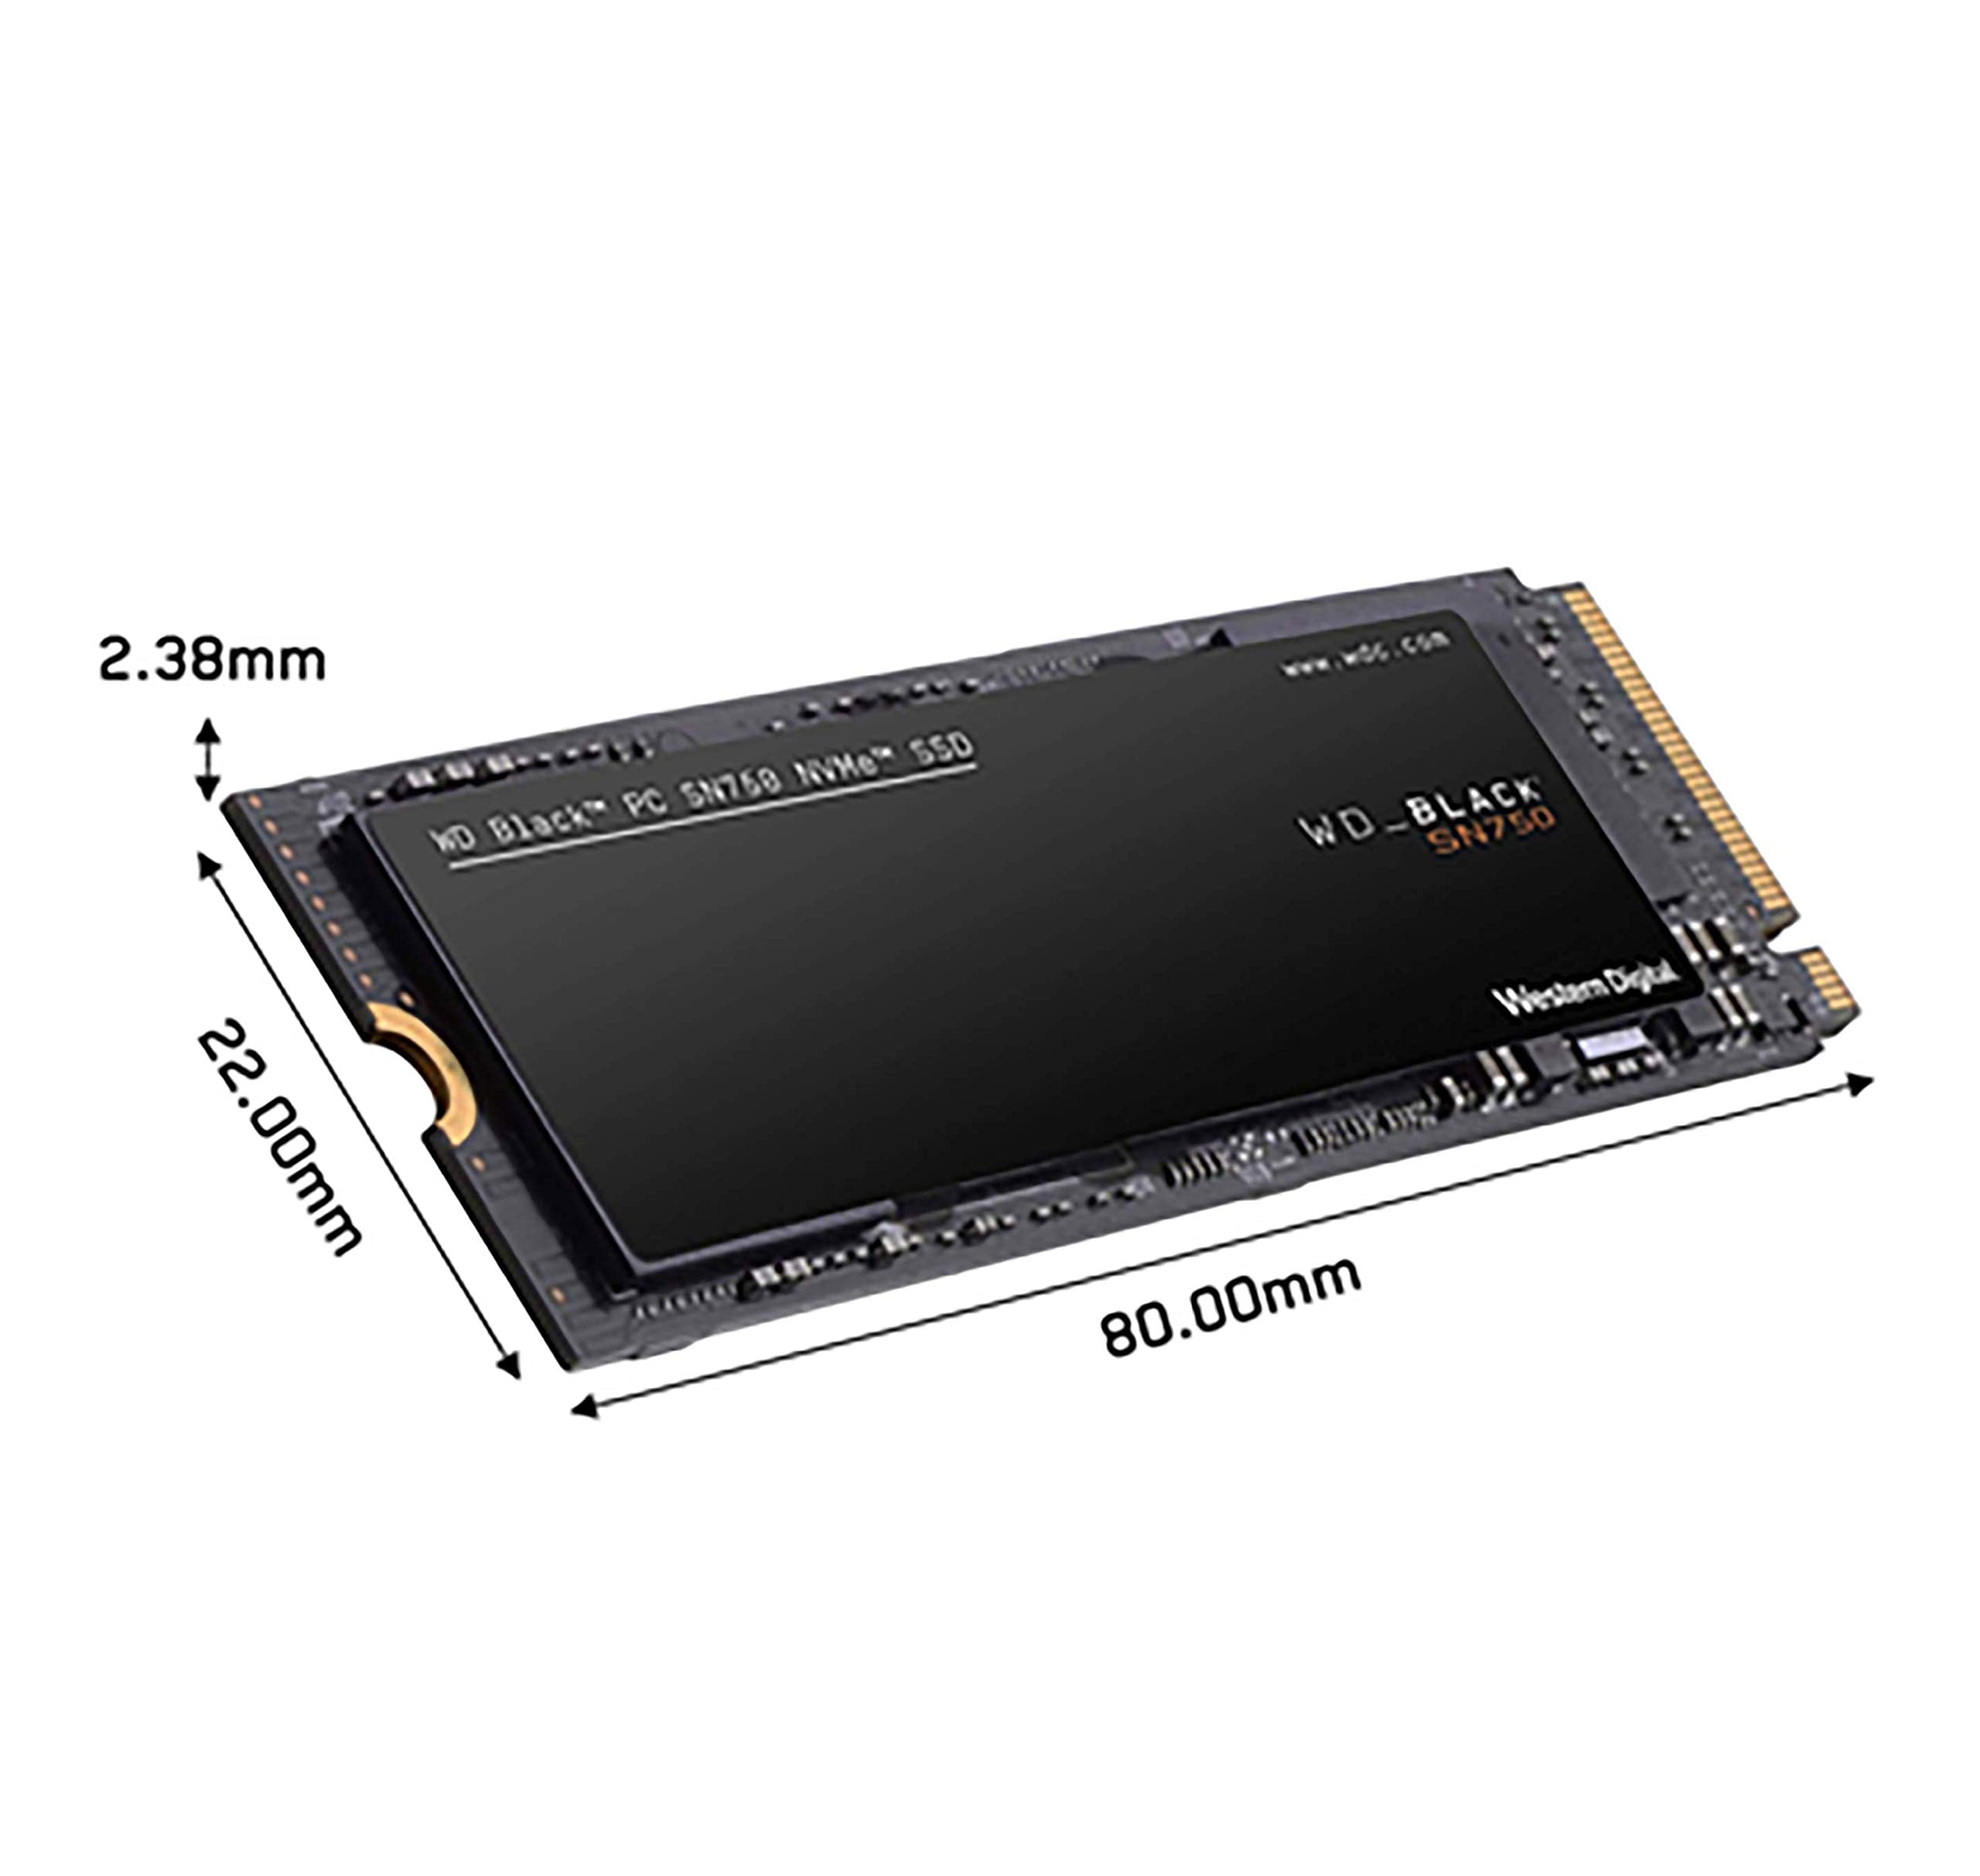 WD_Black SN750 1TB NVMe Internal Gaming SSD - Gen3 PCIe, M.2 2280, 3D NAND - WDS100T3X0C